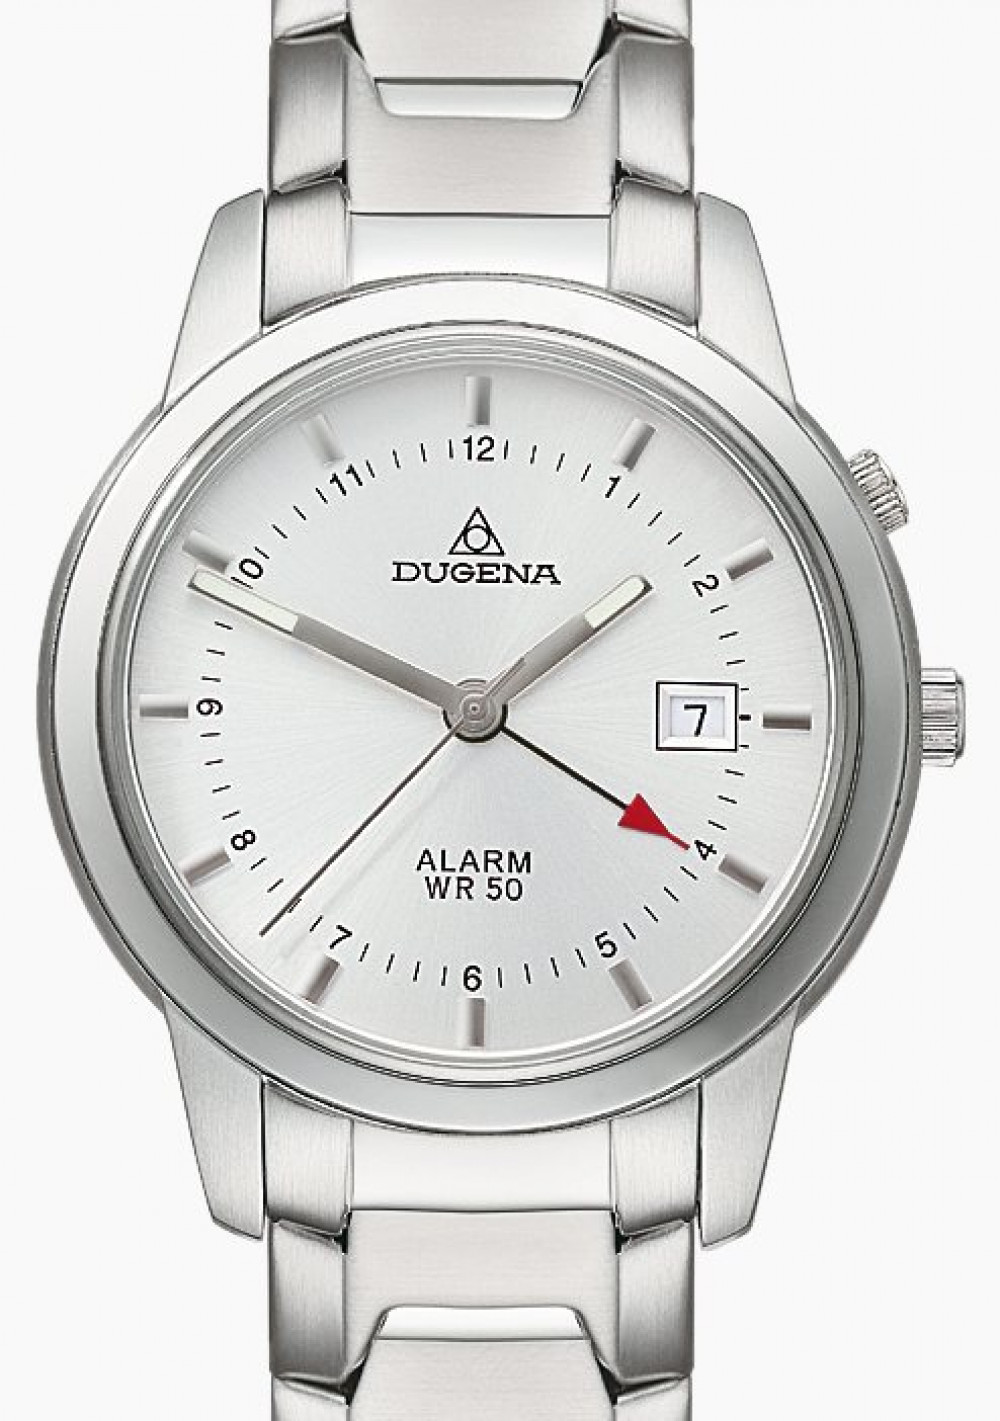 Zegarek firmy Dugena, model Alarm